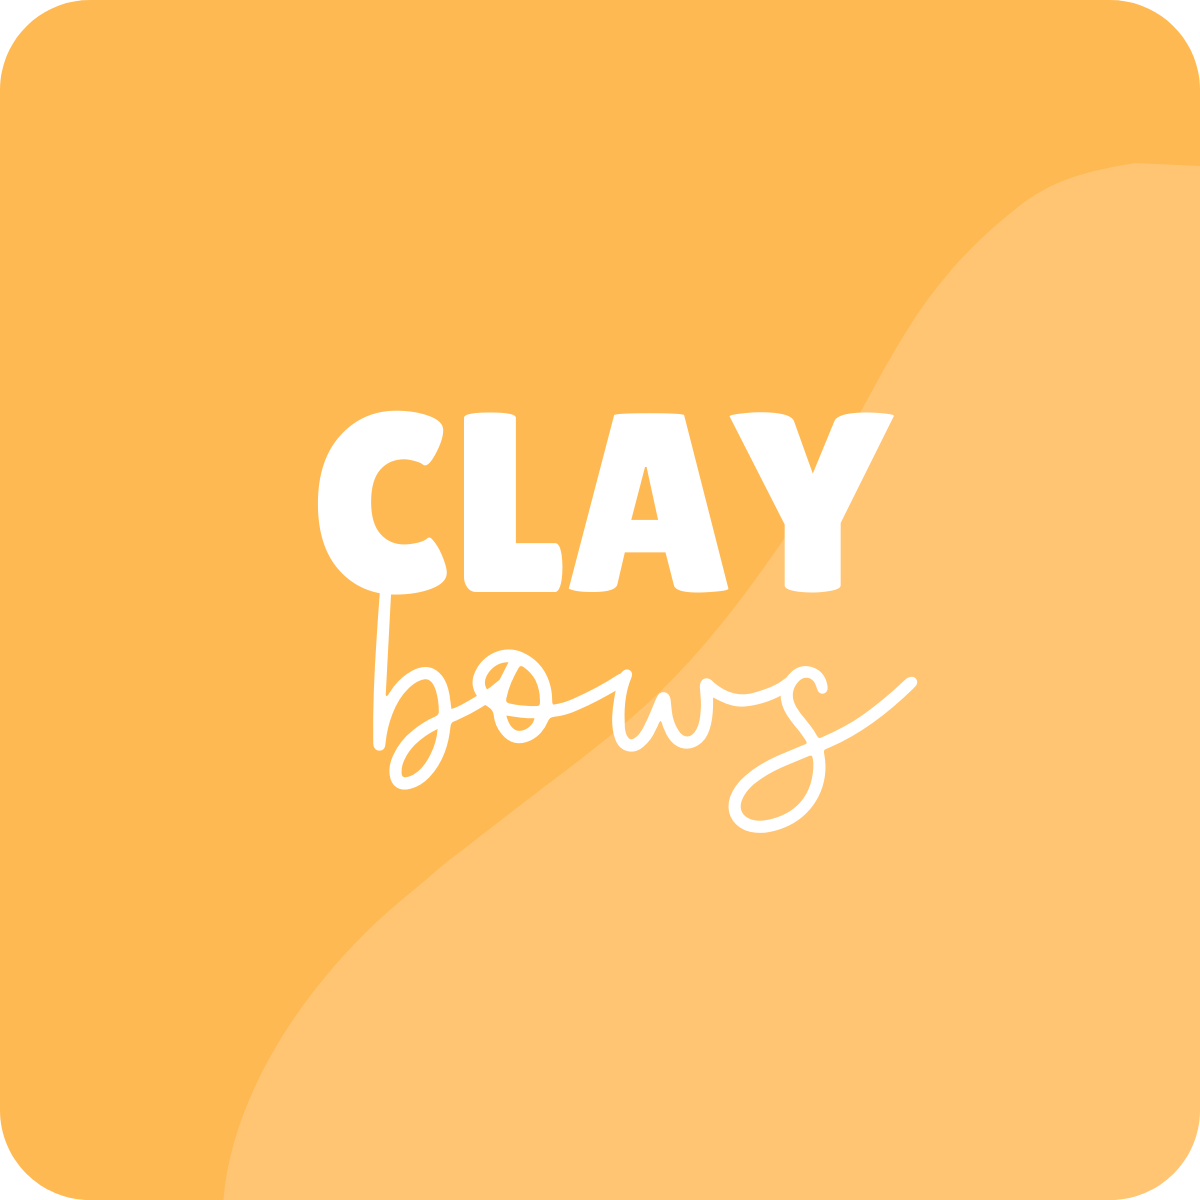 Clay Bows